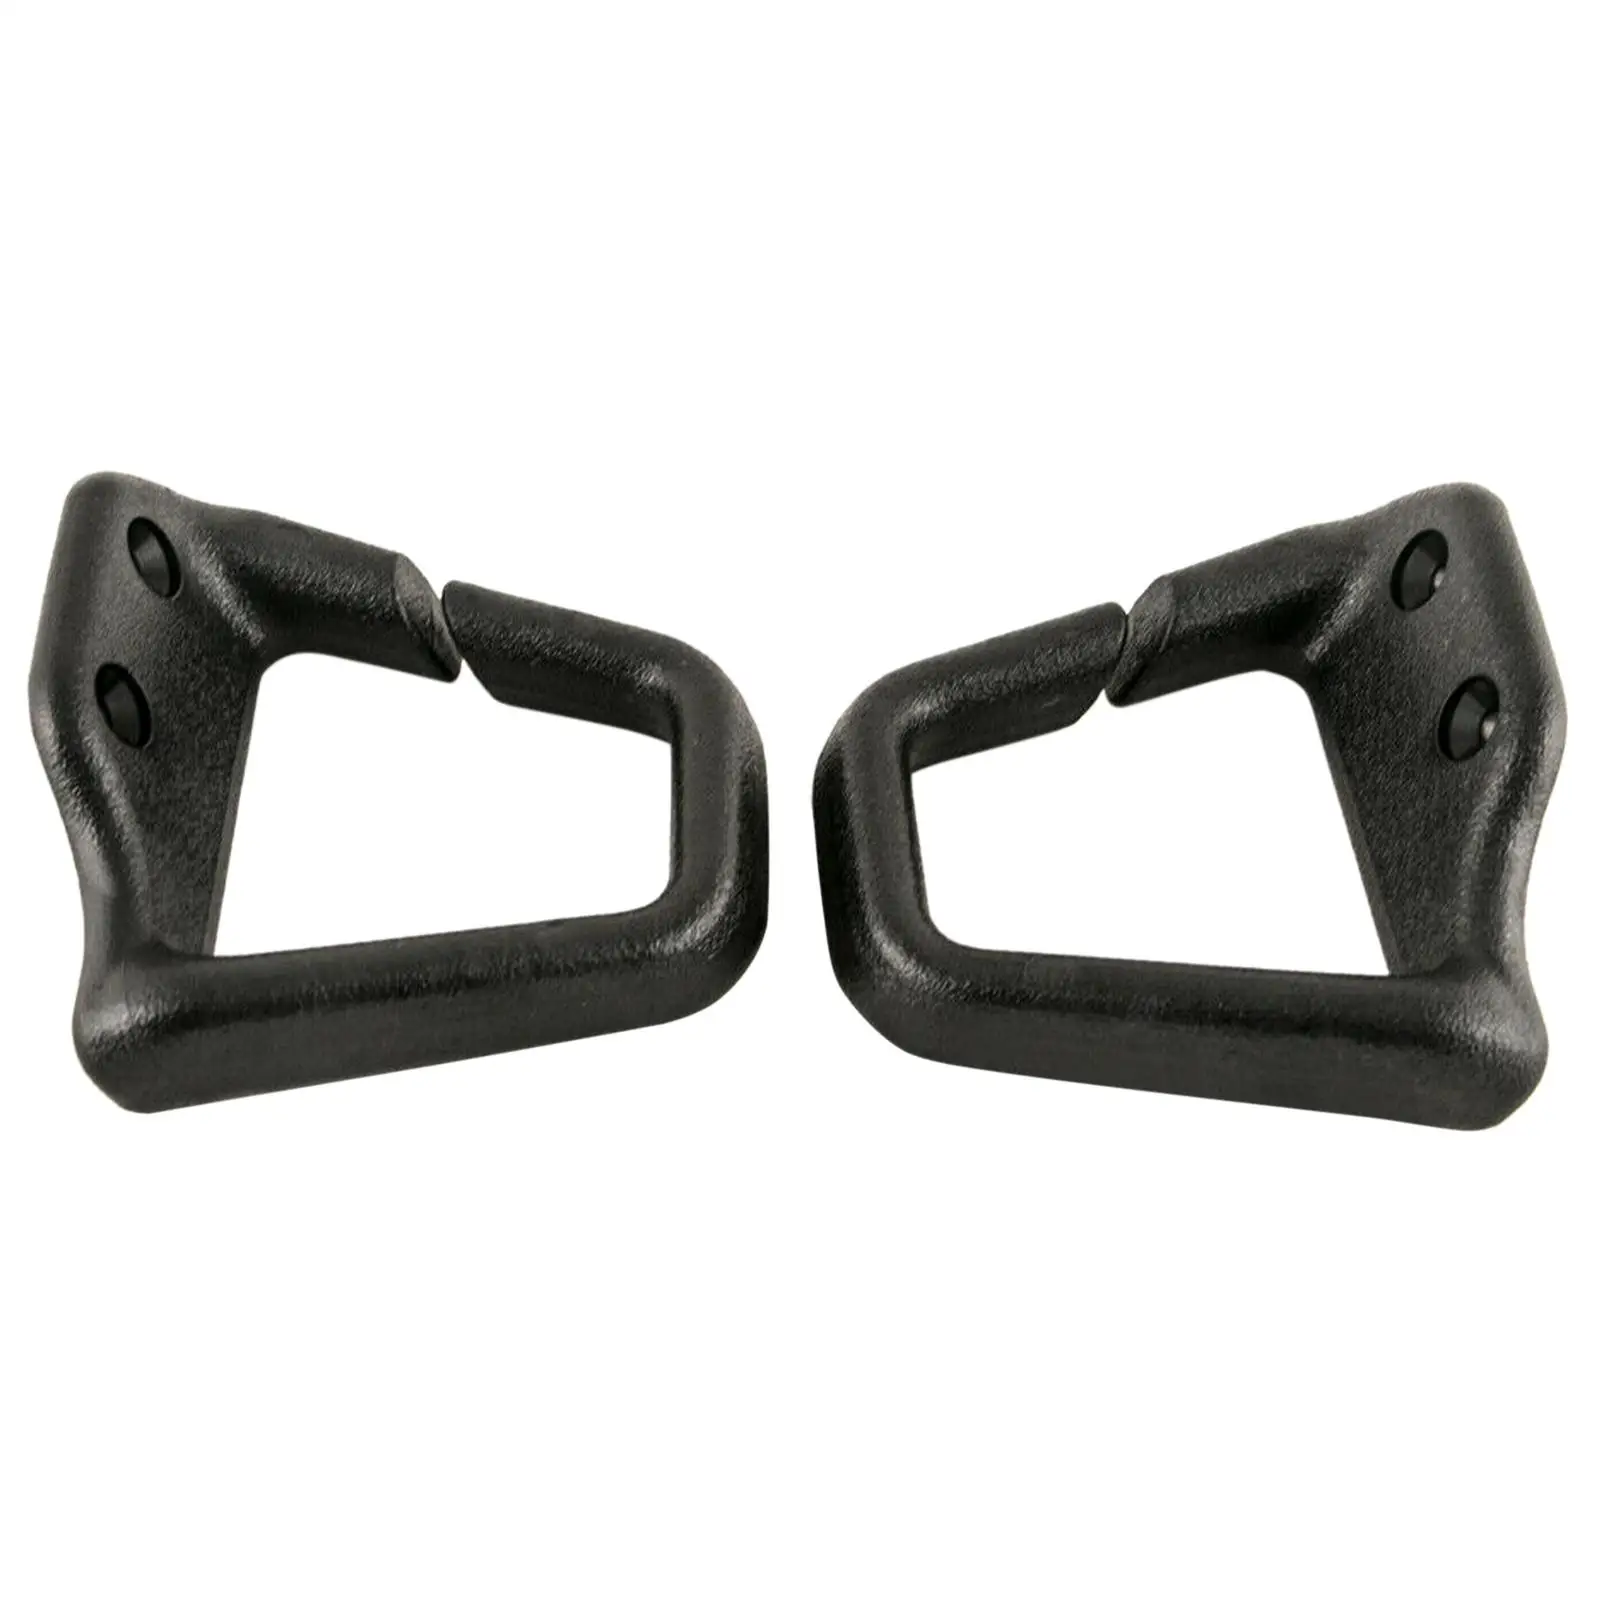 2x 2 Pieces  Belt Shoulder Guides Clamp Adjuster Buckle Stopper Safety  Clips 3-02 HT7203 HT7202